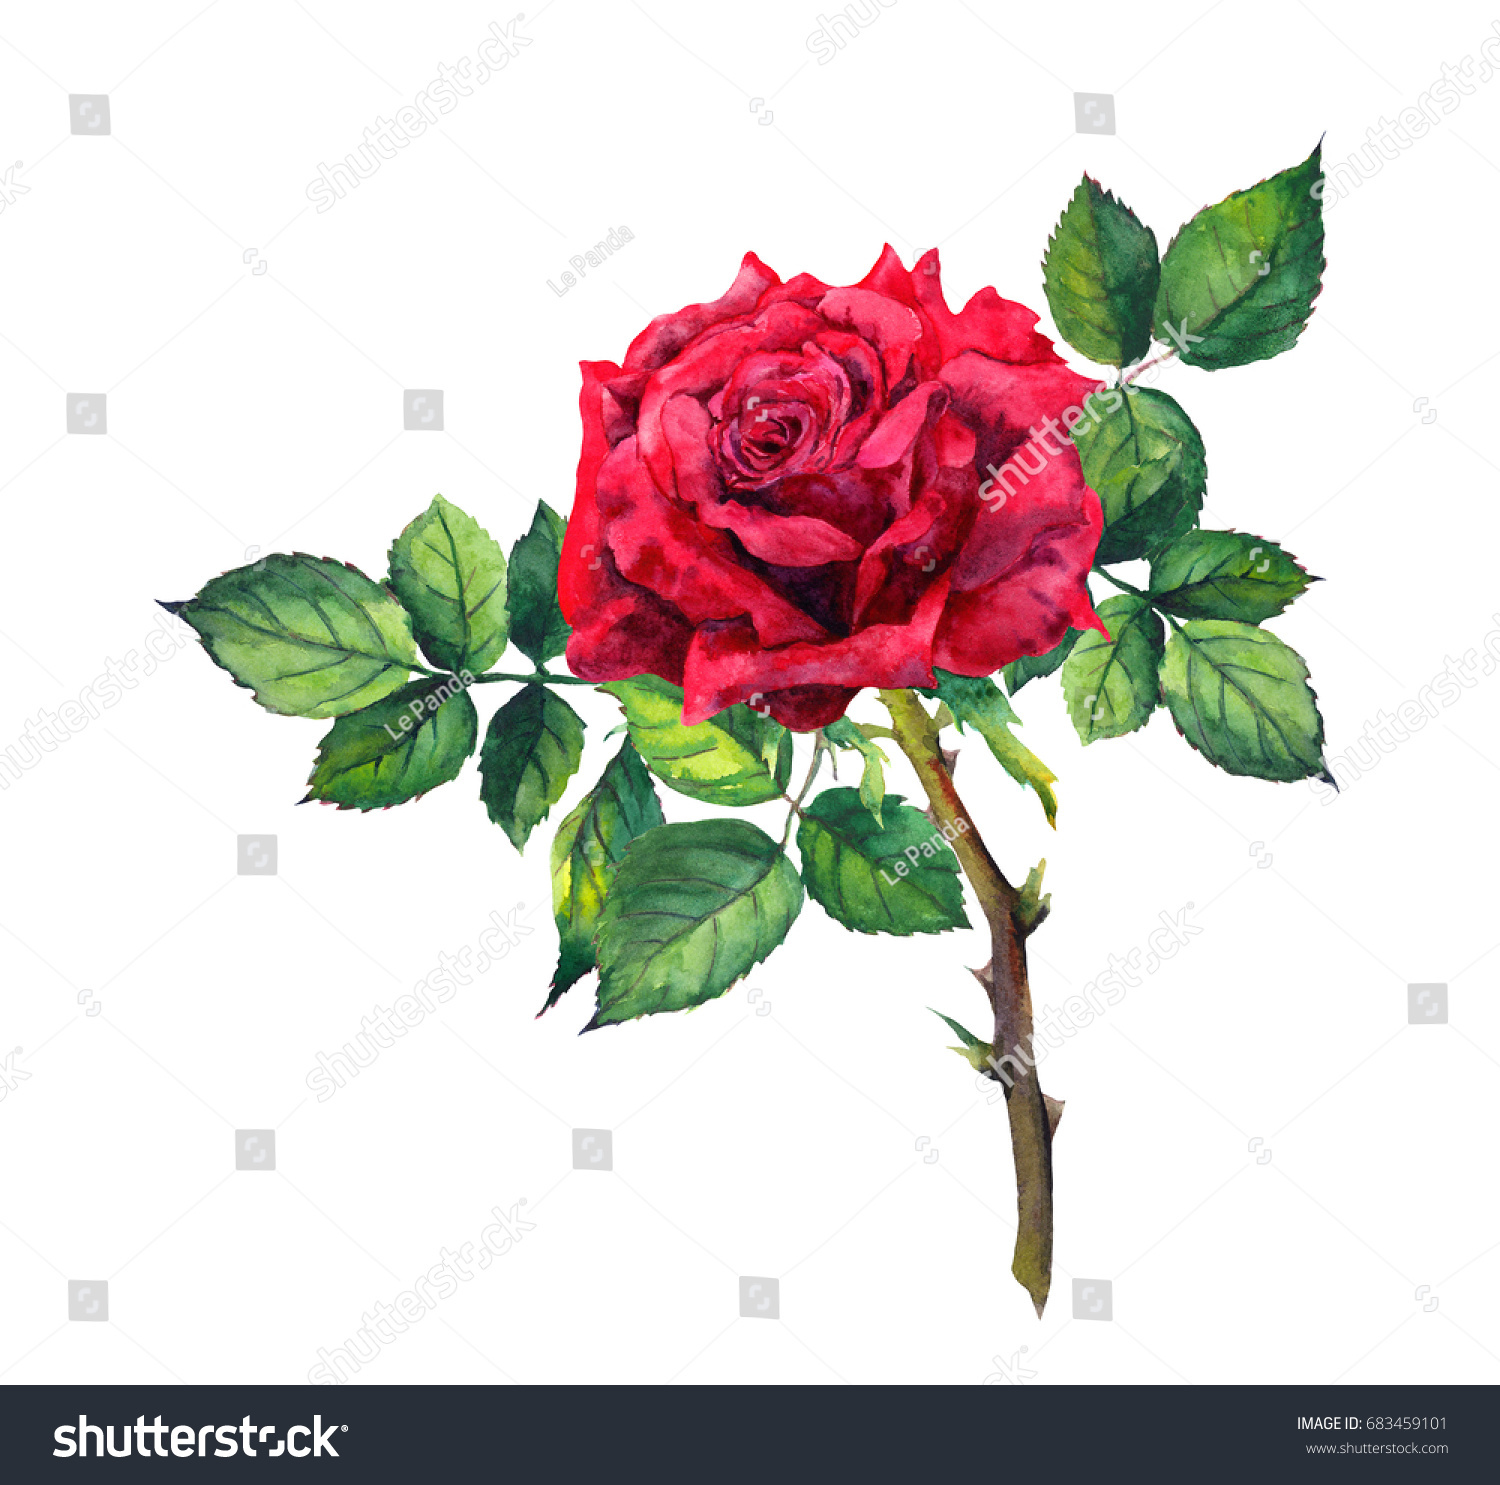 Red Rose Flower Stem Leaves Watercolor Stock Illustration 683459101 ...